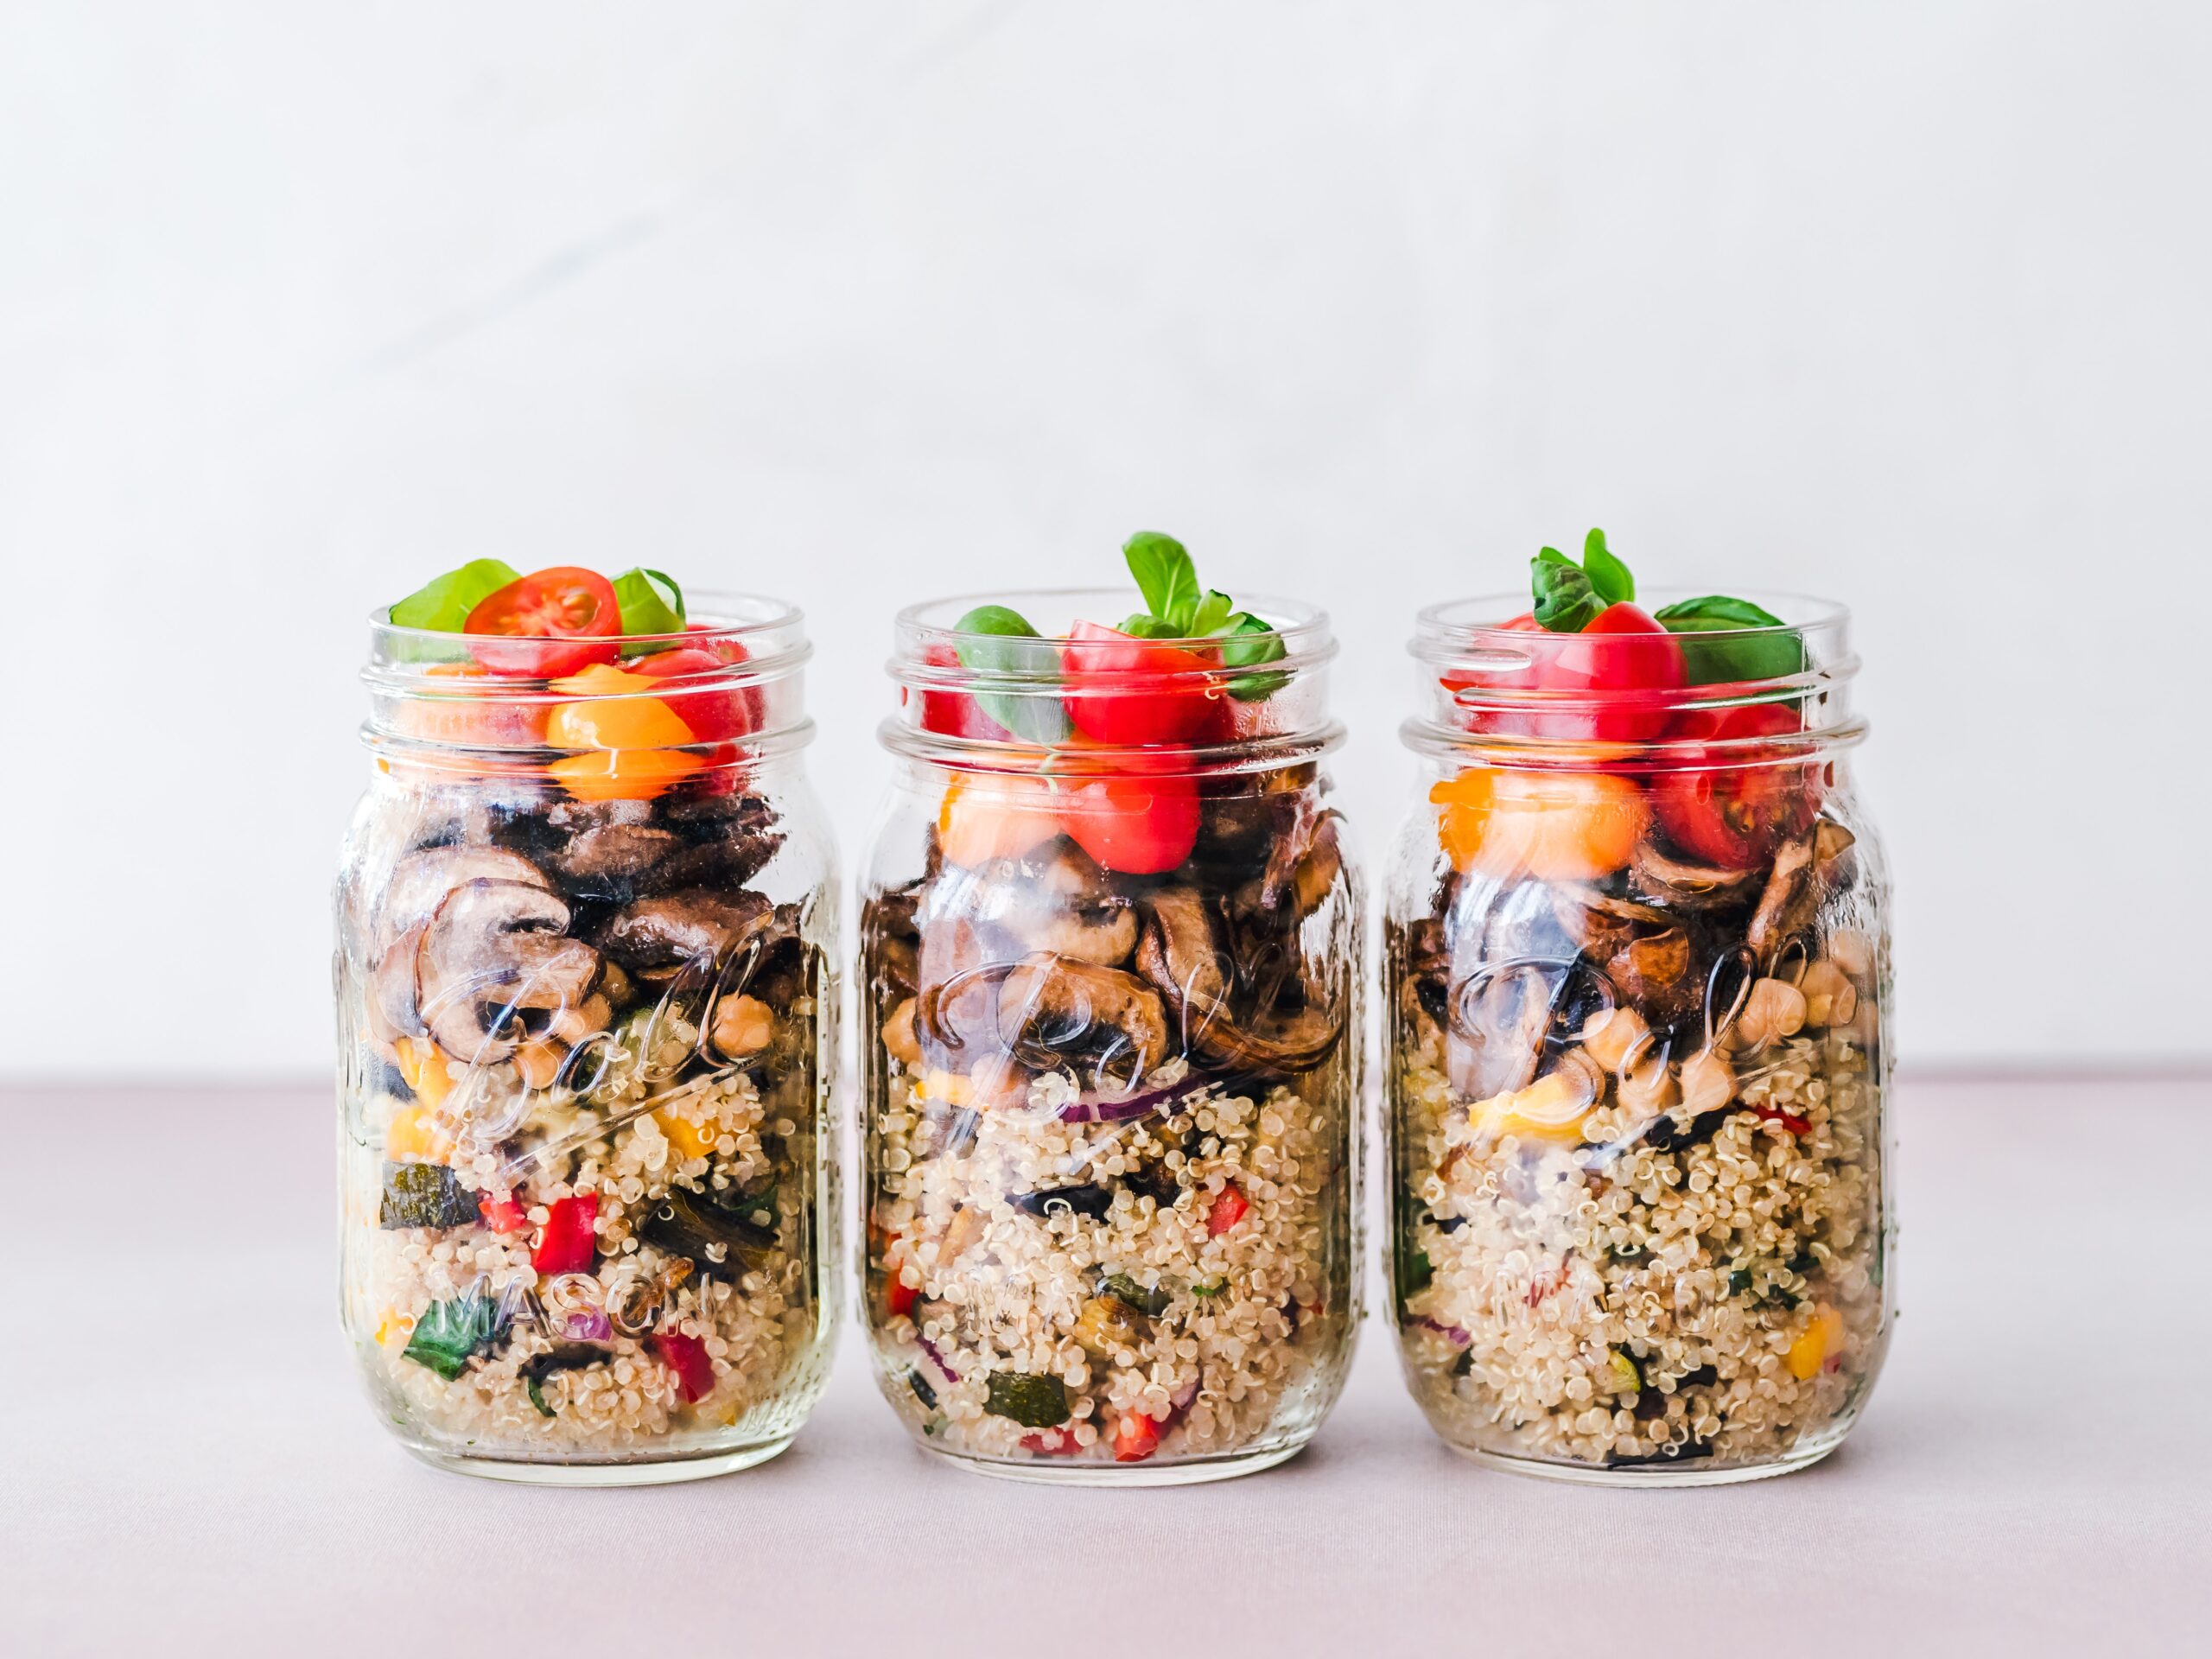 Mason jar salads - one of our meal prep ideas